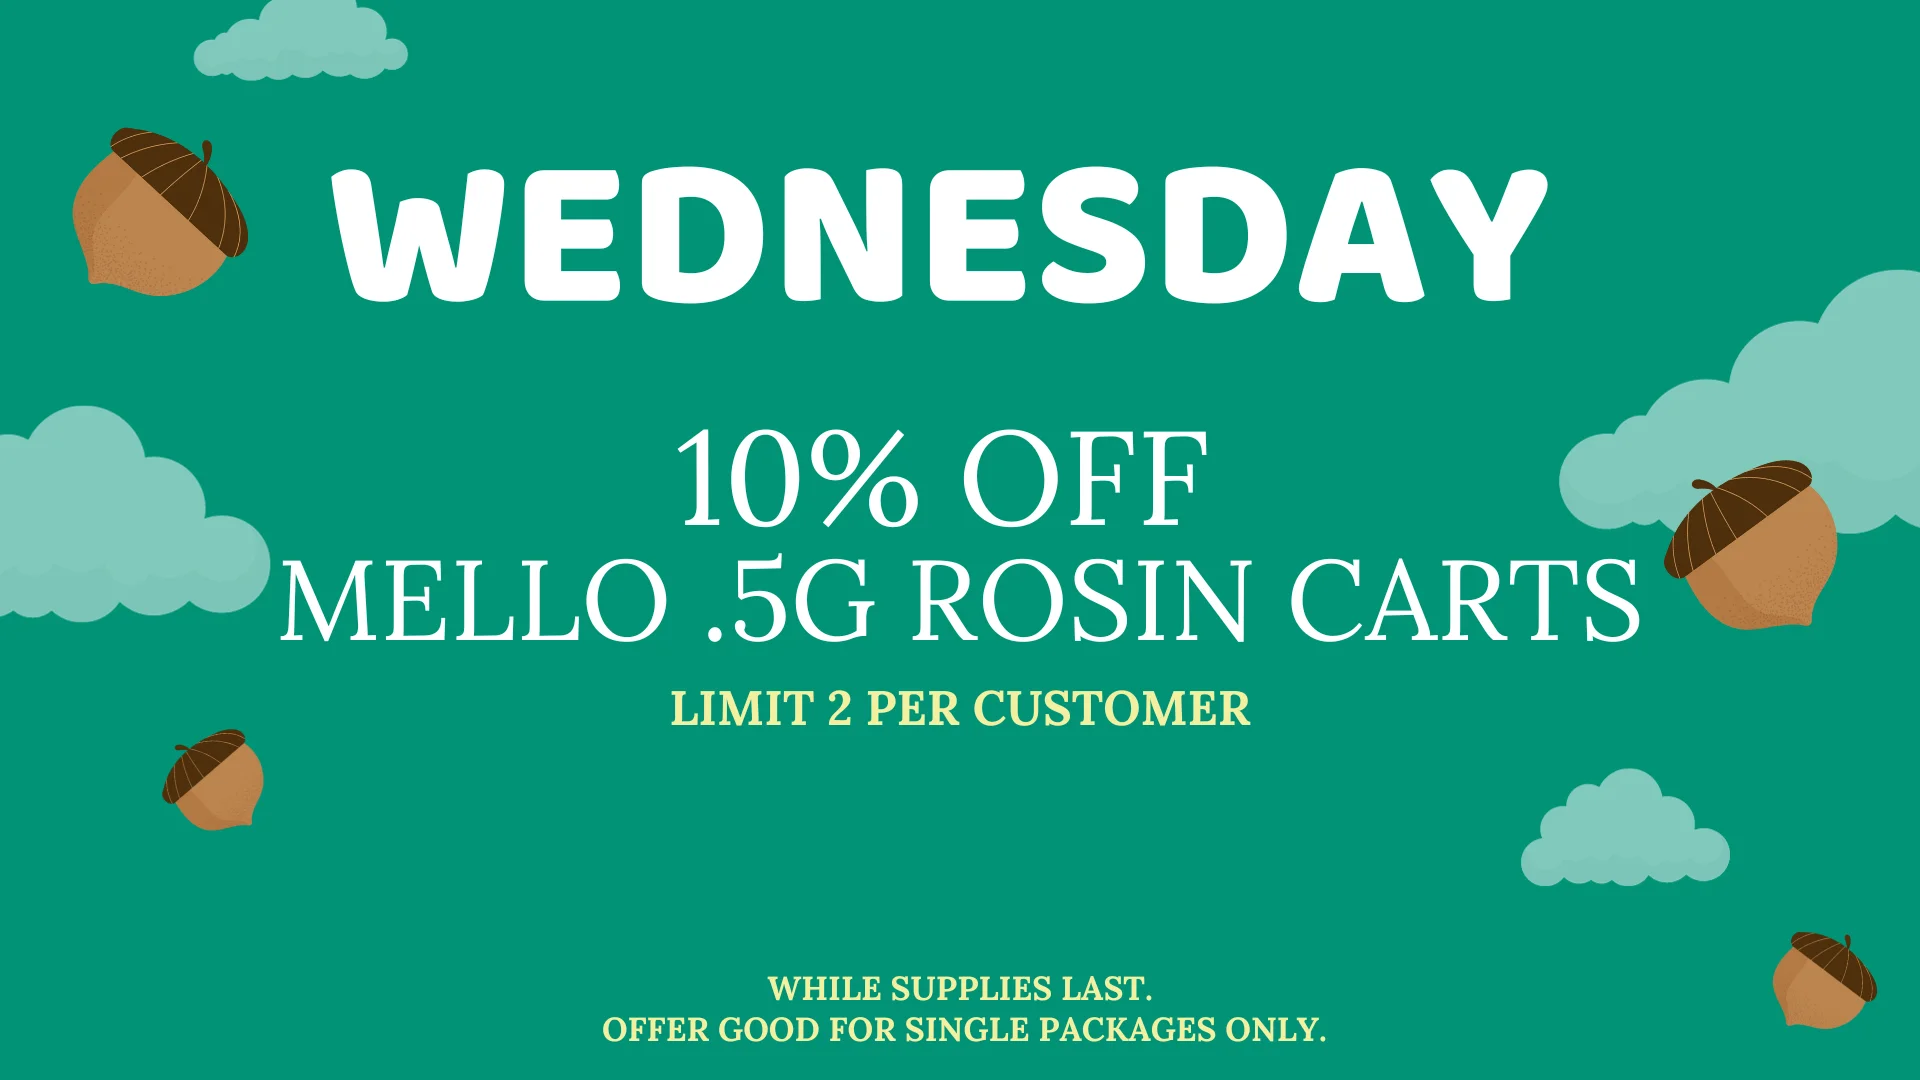 WEDNESDAY MELLO .5G ROSIN CARTS 10% OFF